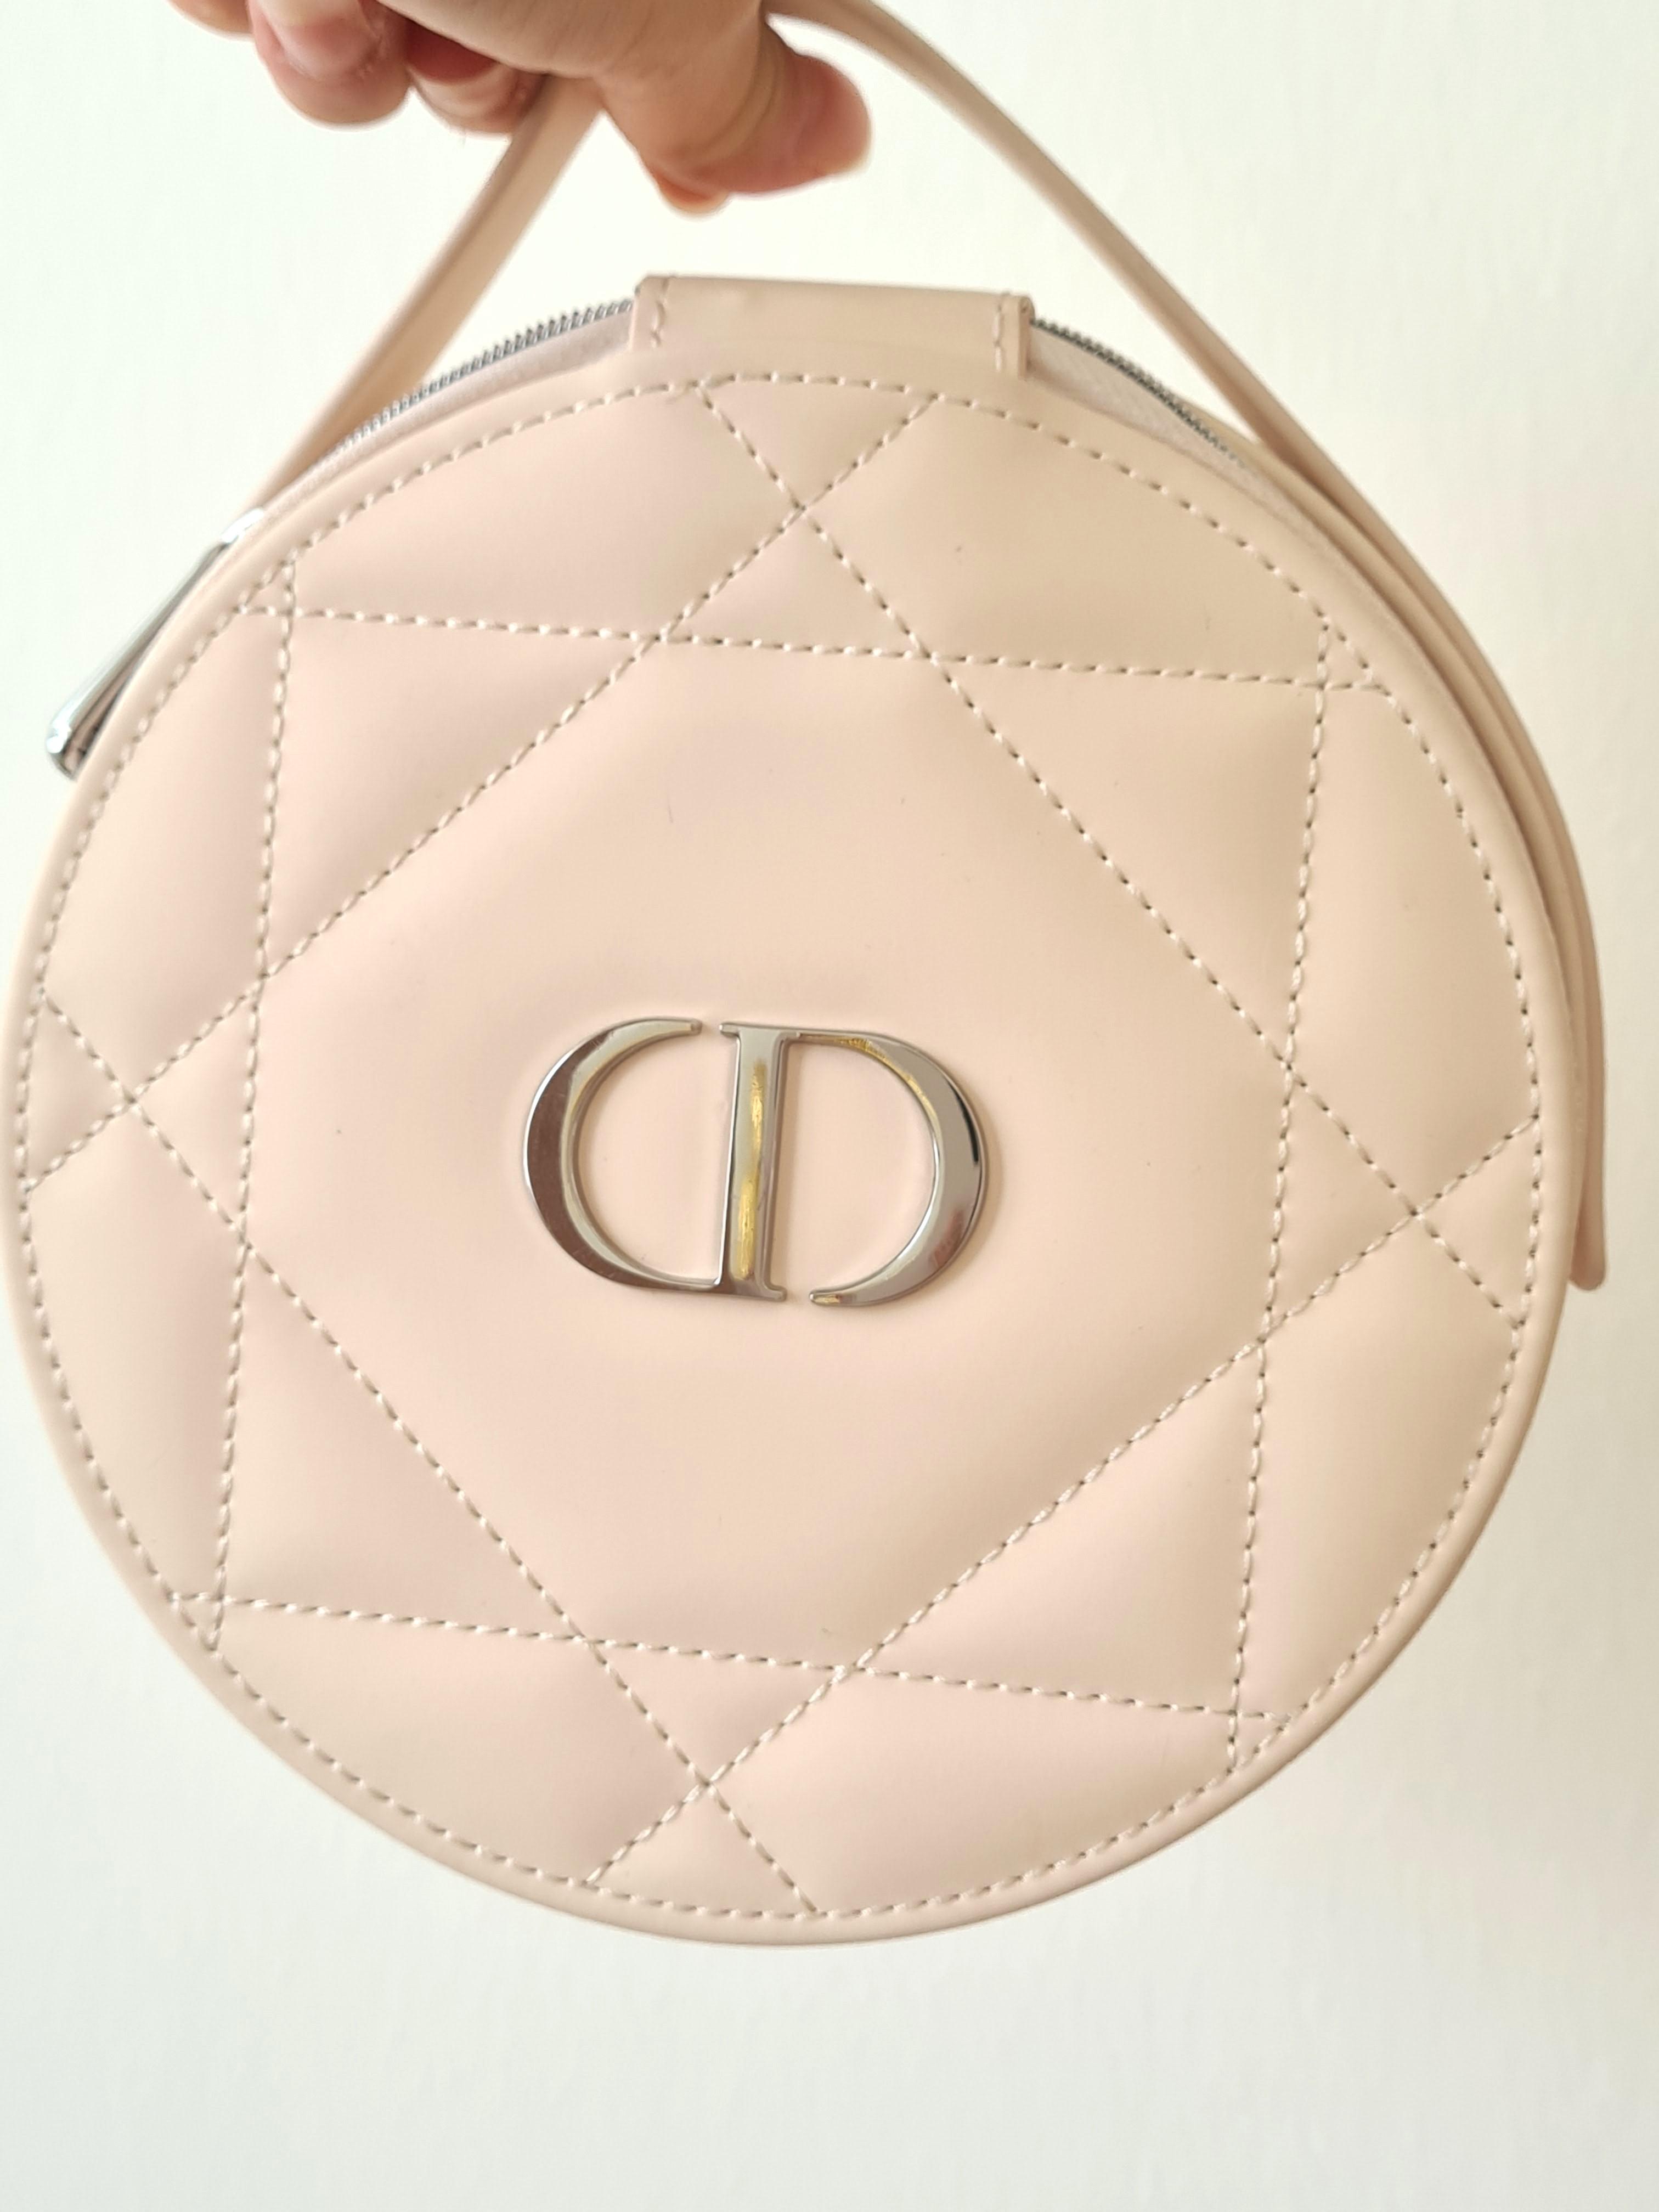 DIOR Beauty Cosmetic Case Converted Crossbody Mini Bag Purse Pouch Clutch   eBay